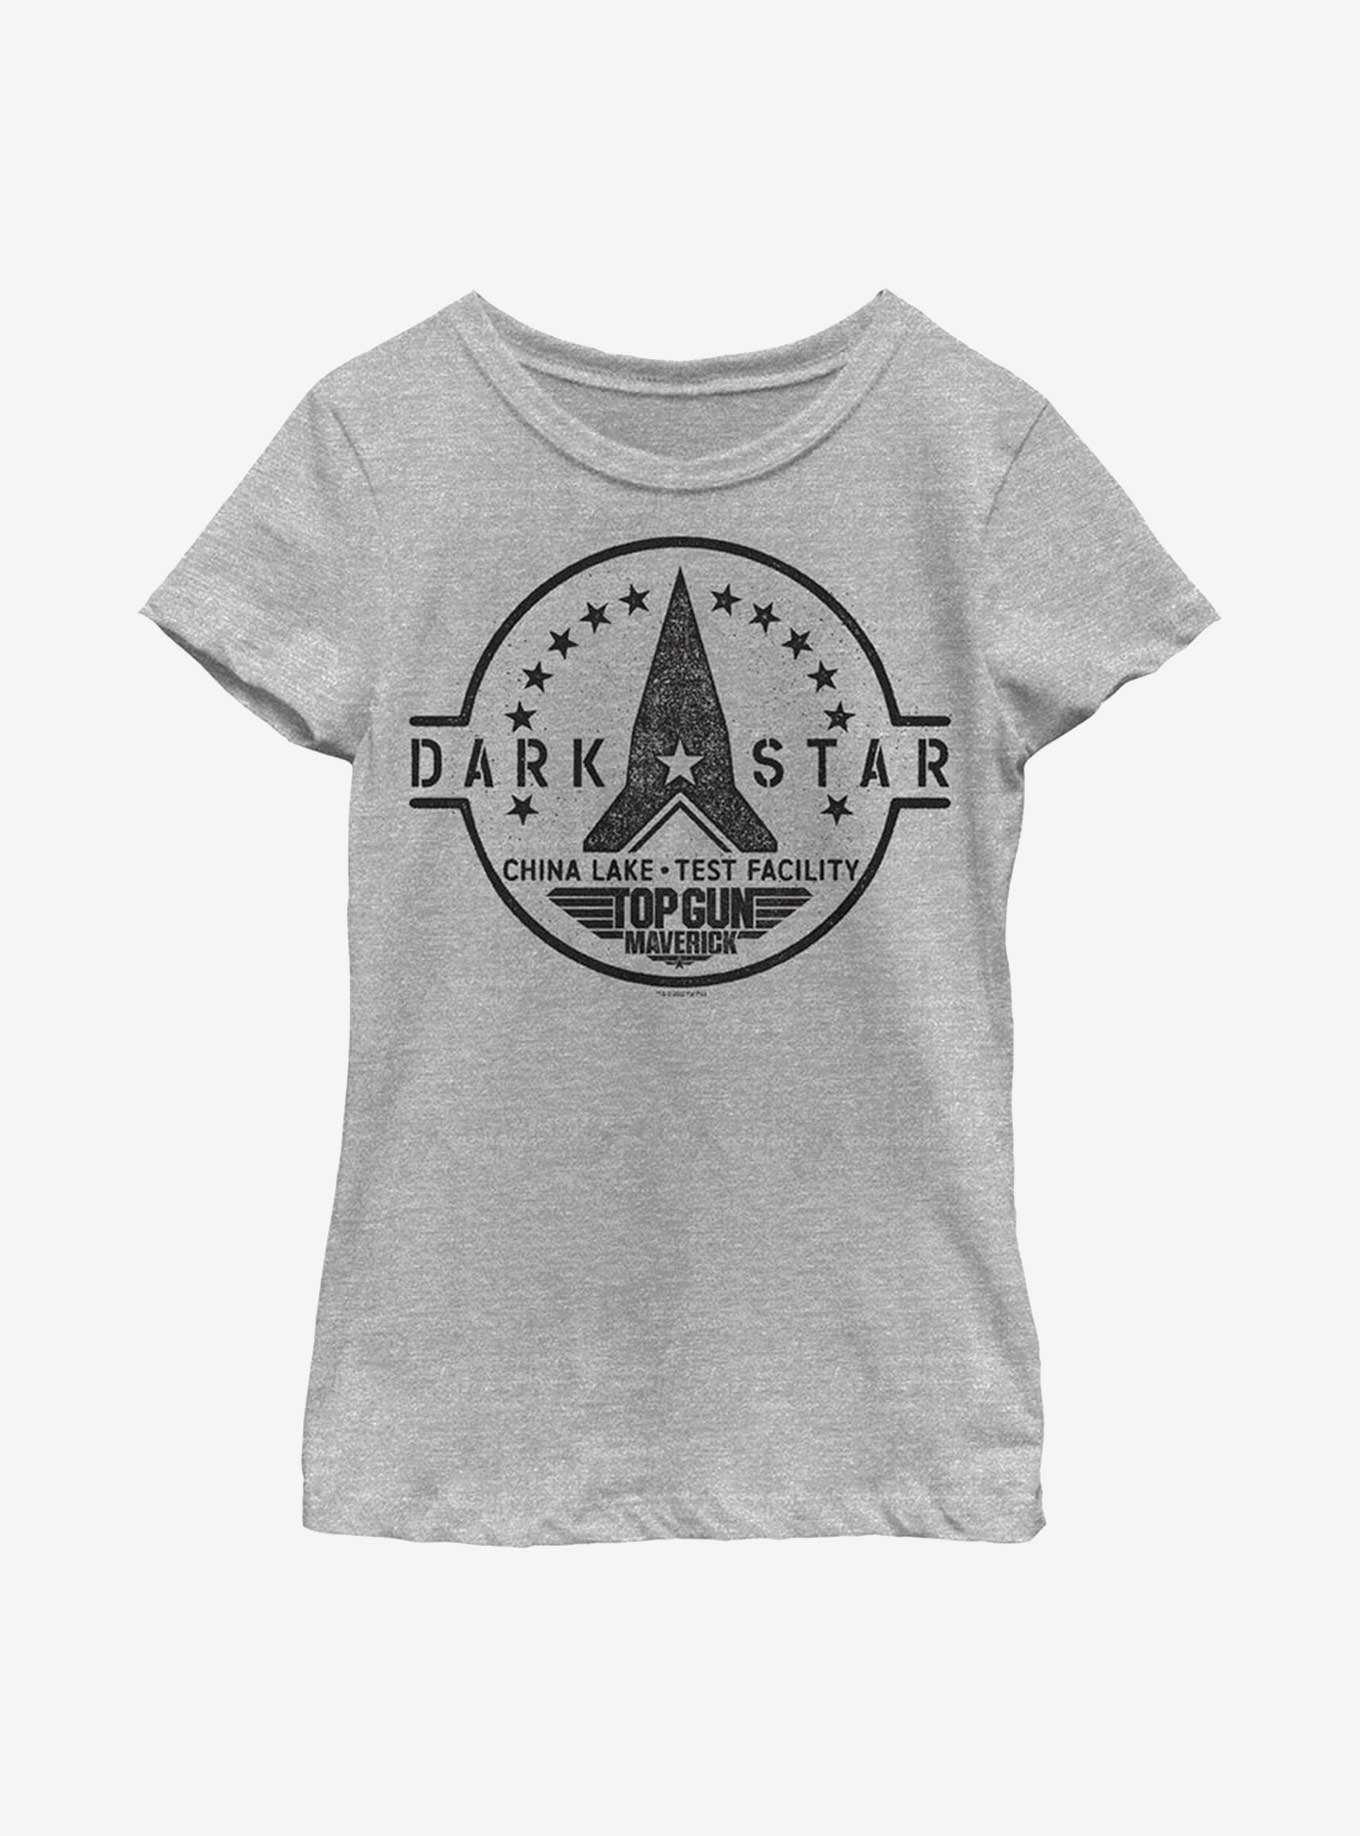 Top Gun: Maverick Dark Star Youth Girls T-Shirt, , hi-res